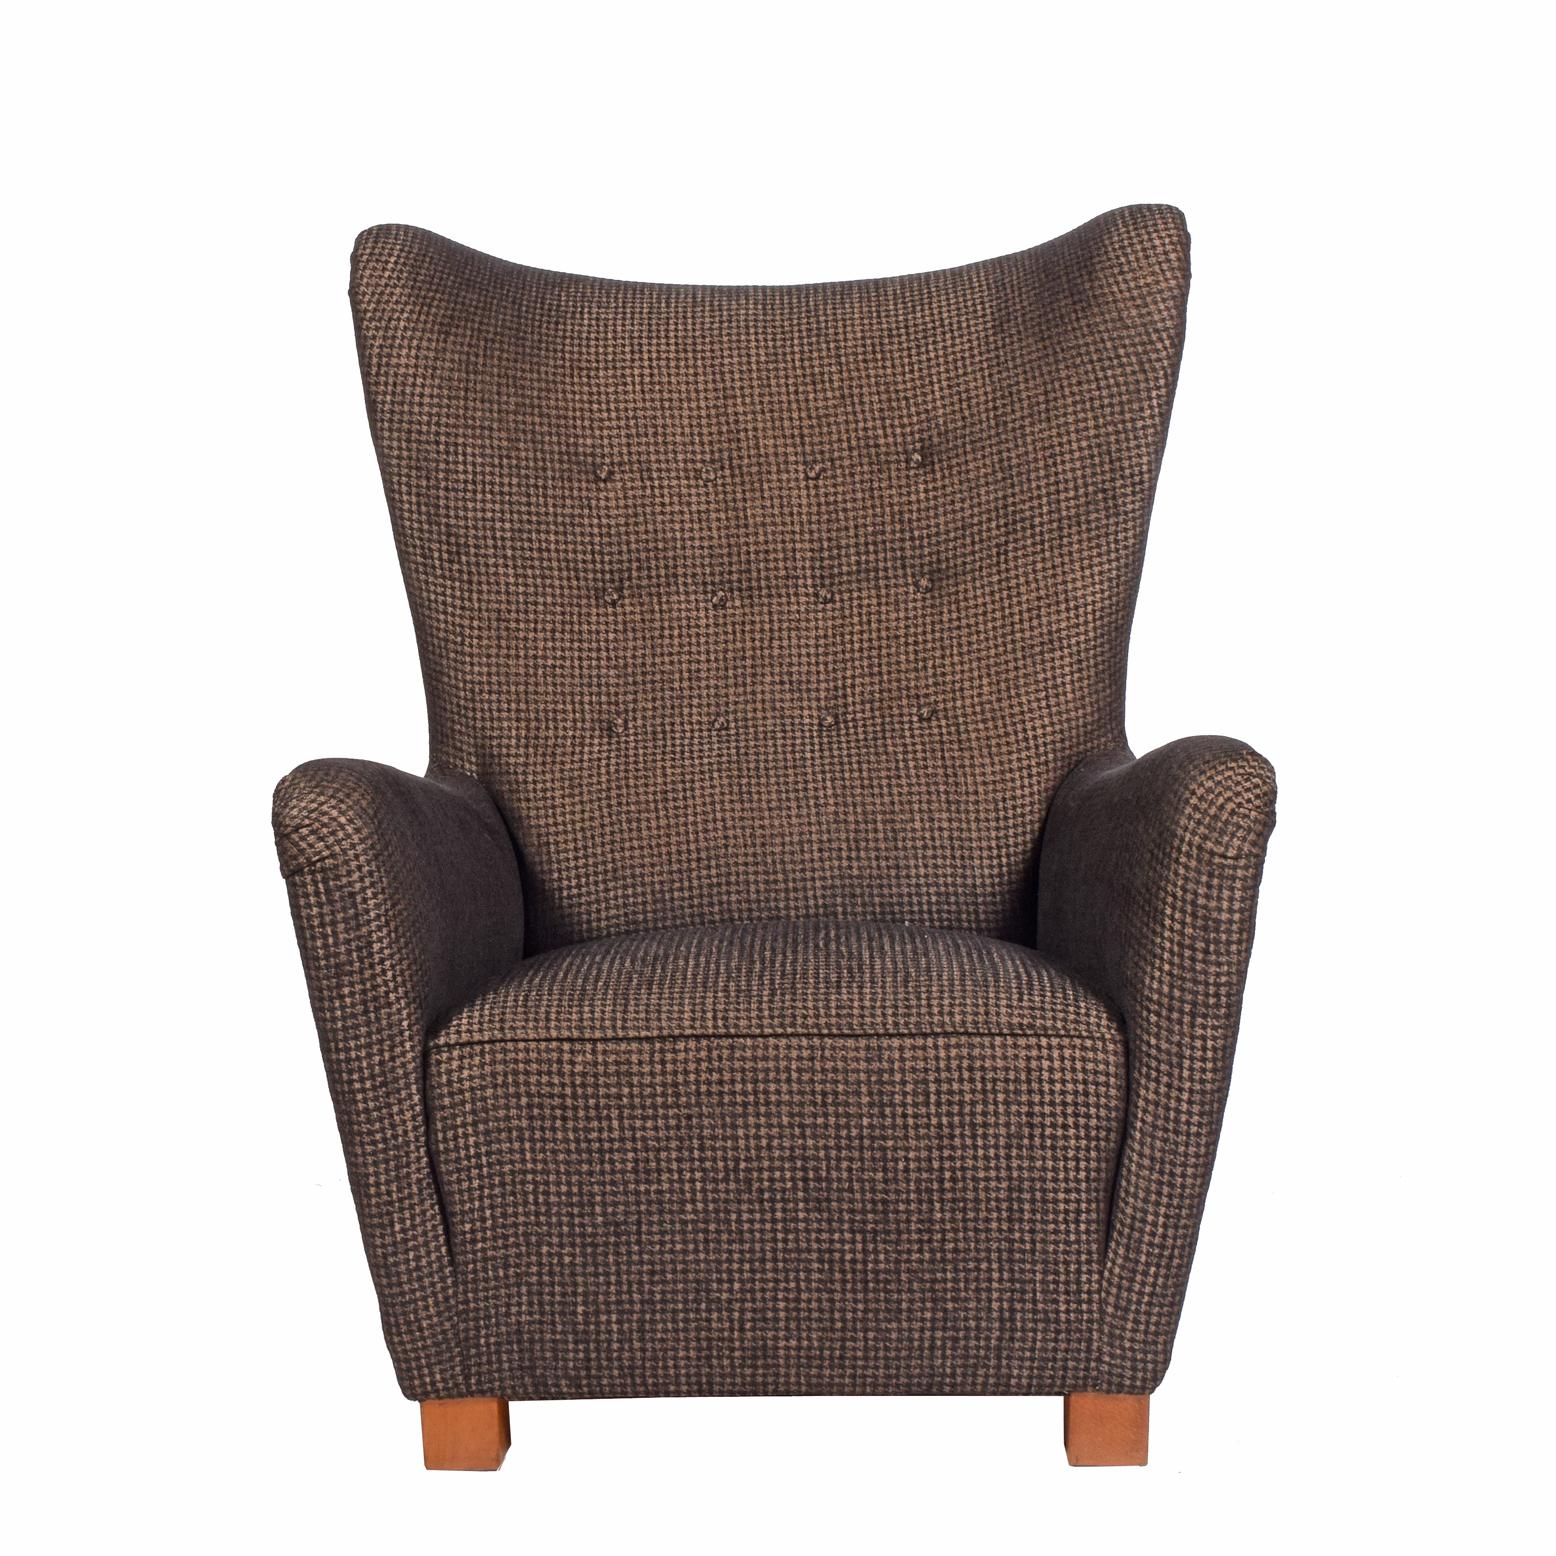 High back easy chair fabric upholstered. Solid oak legs. Fritz Hansen catalog from 1942.